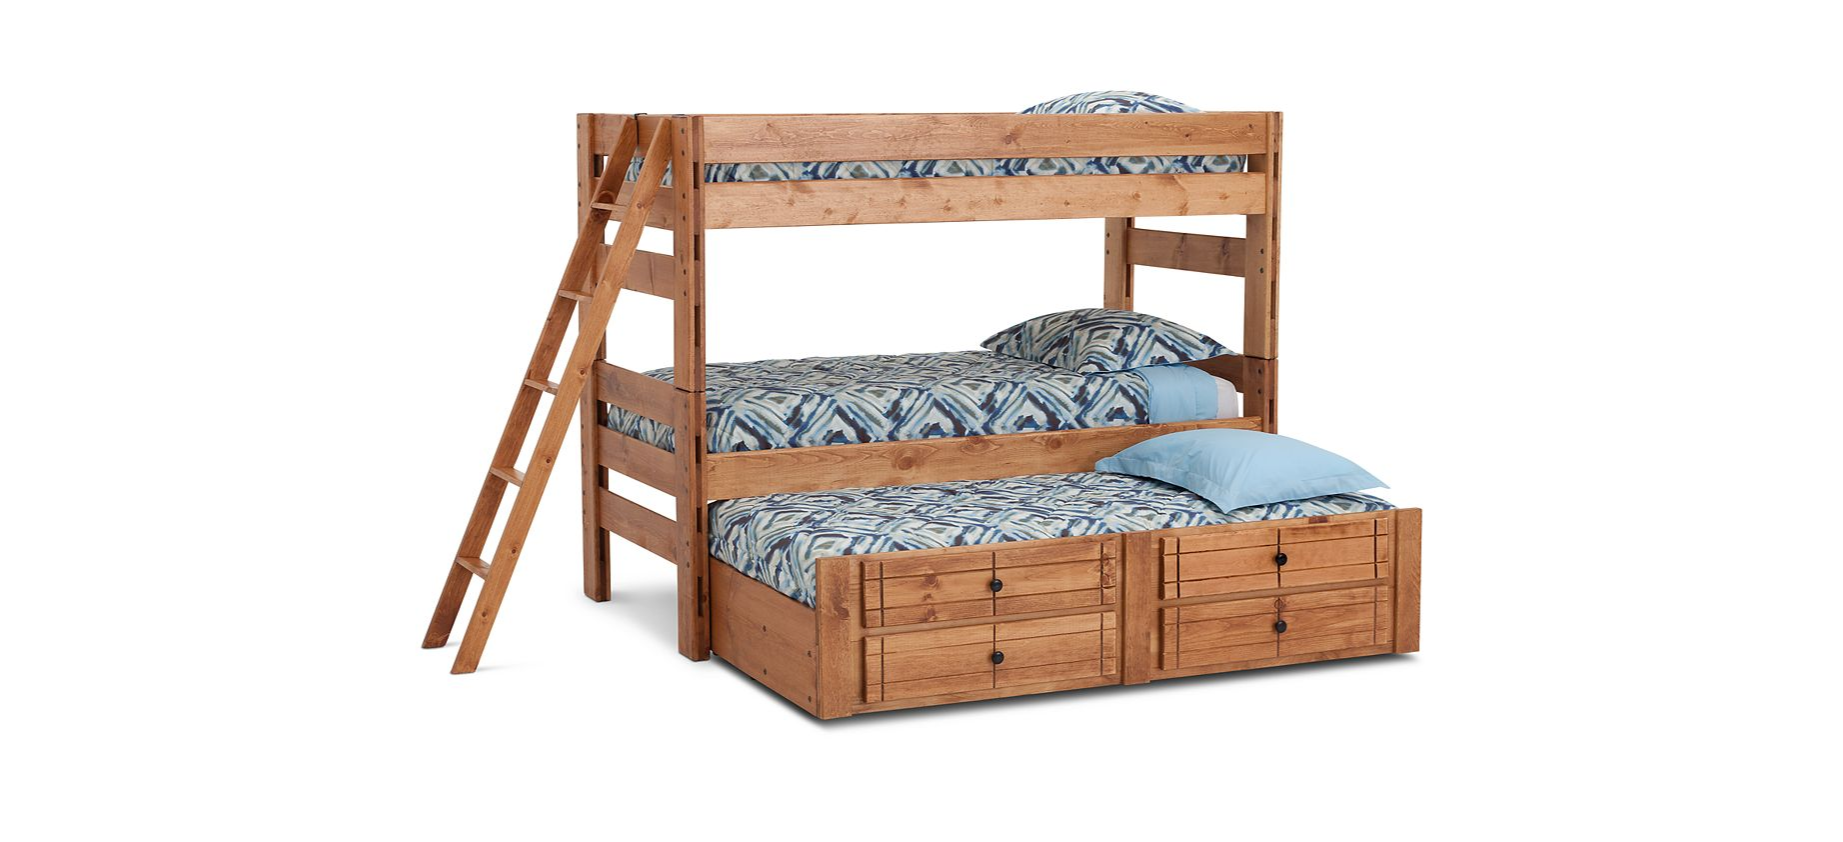 Durango Bunk Bed with Trundle - M&J Design Furniture 